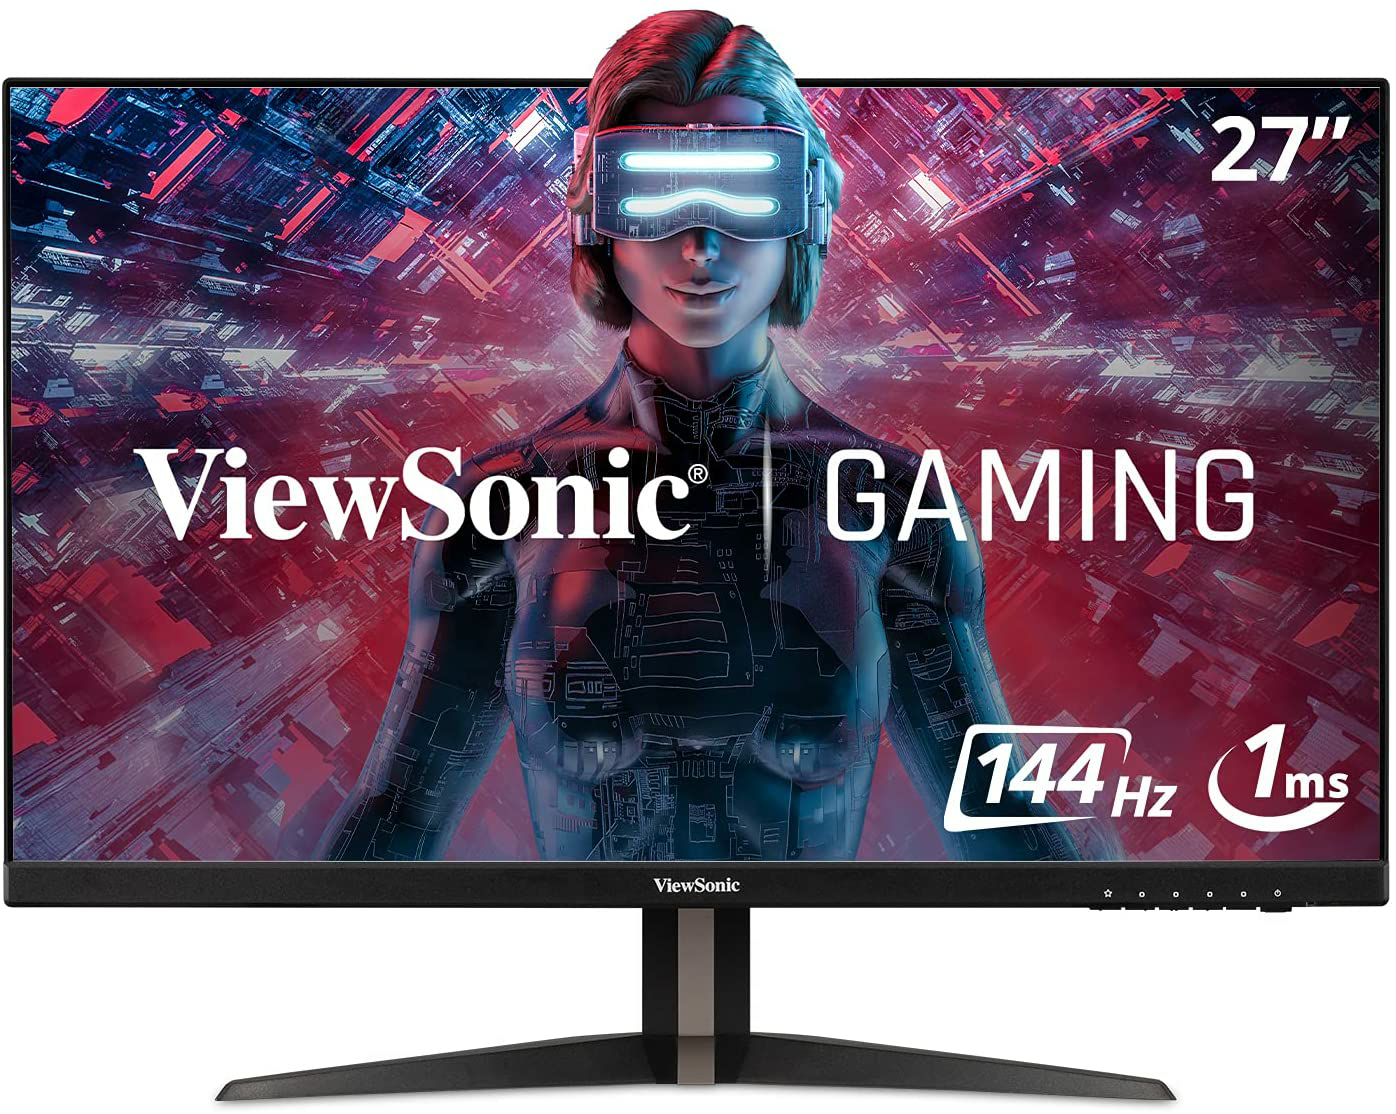 ViewSonic VX2768-2KP-MHD 27 Inch WQHD 1440p 144Hz 1ms IPS Gaming Monitor $189.99